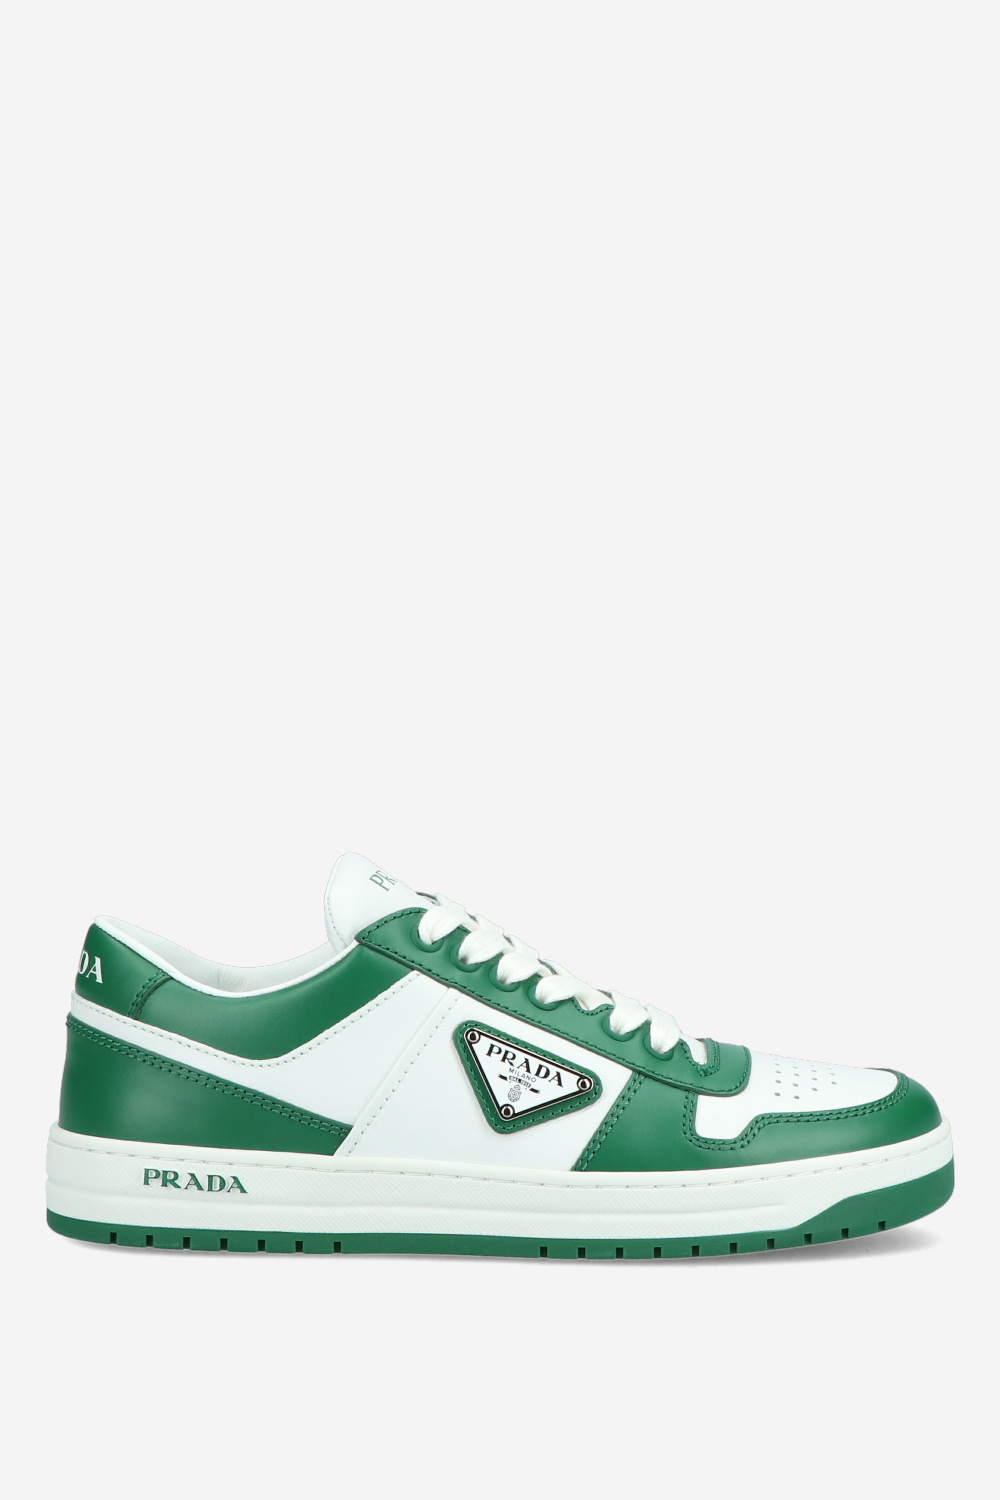 Prada Sneaker Groen